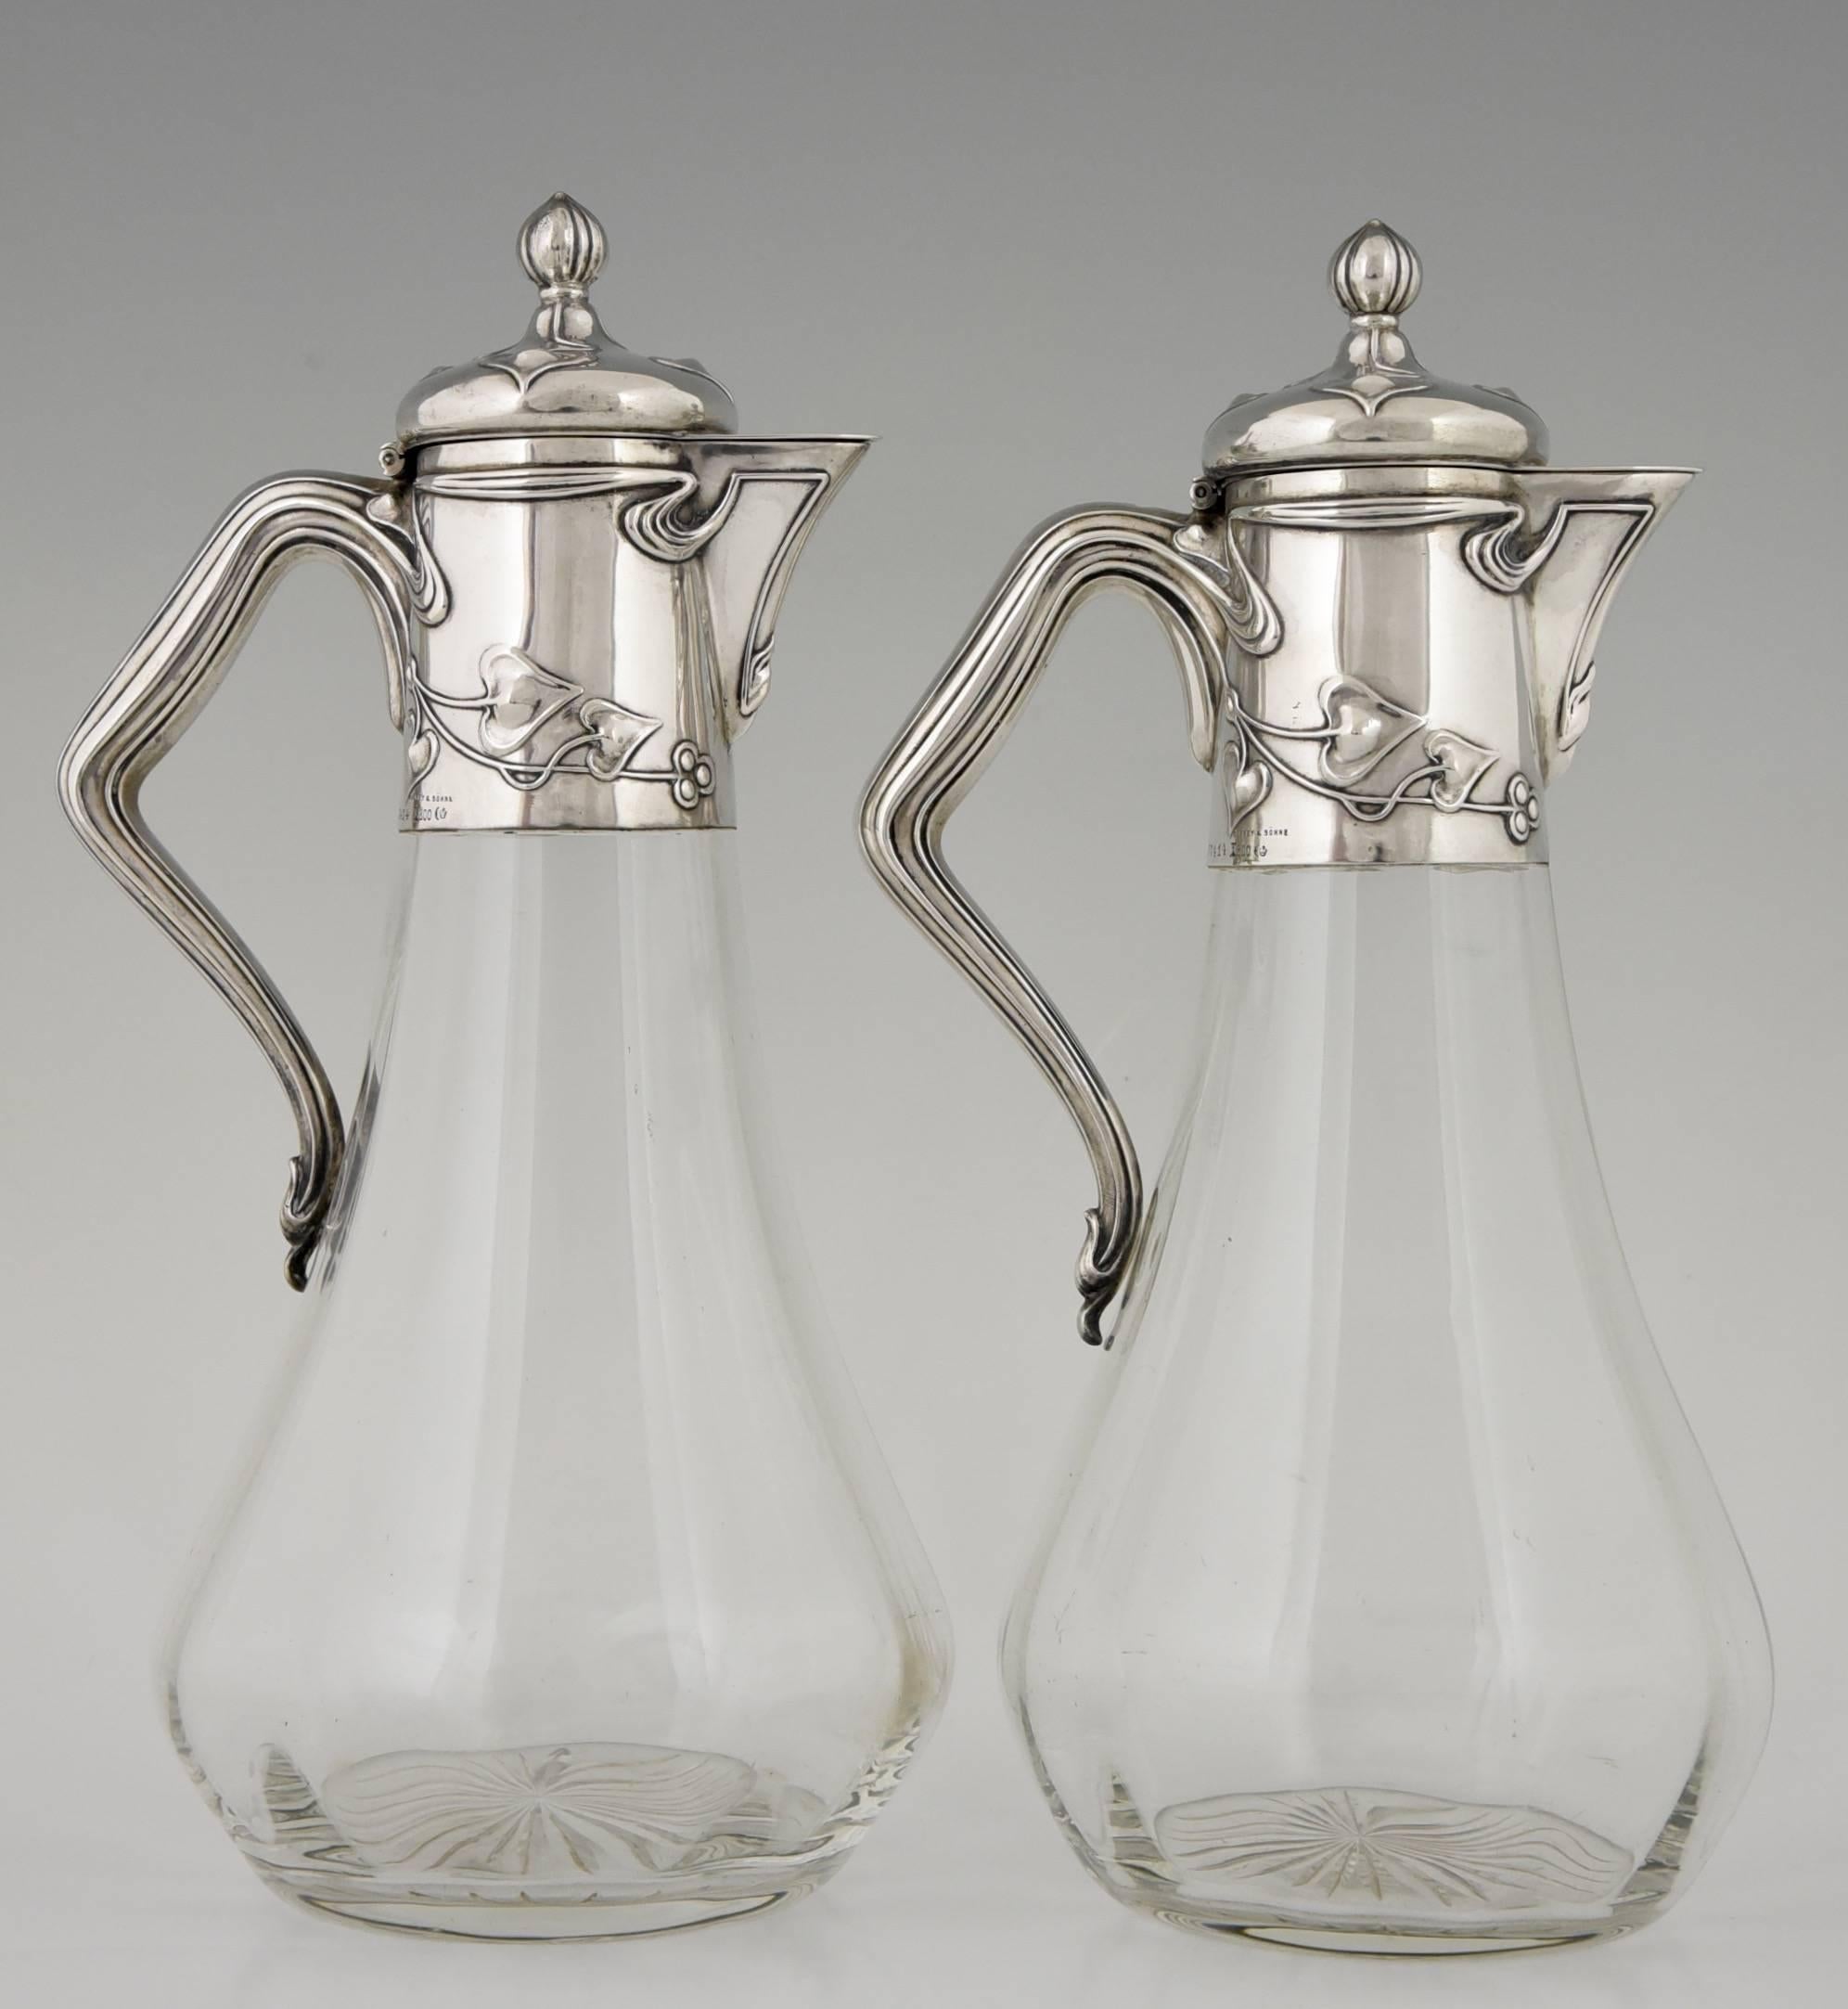 20th Century Pair of Art Nouveau German Silver Decanters by Koch & Bergfeld